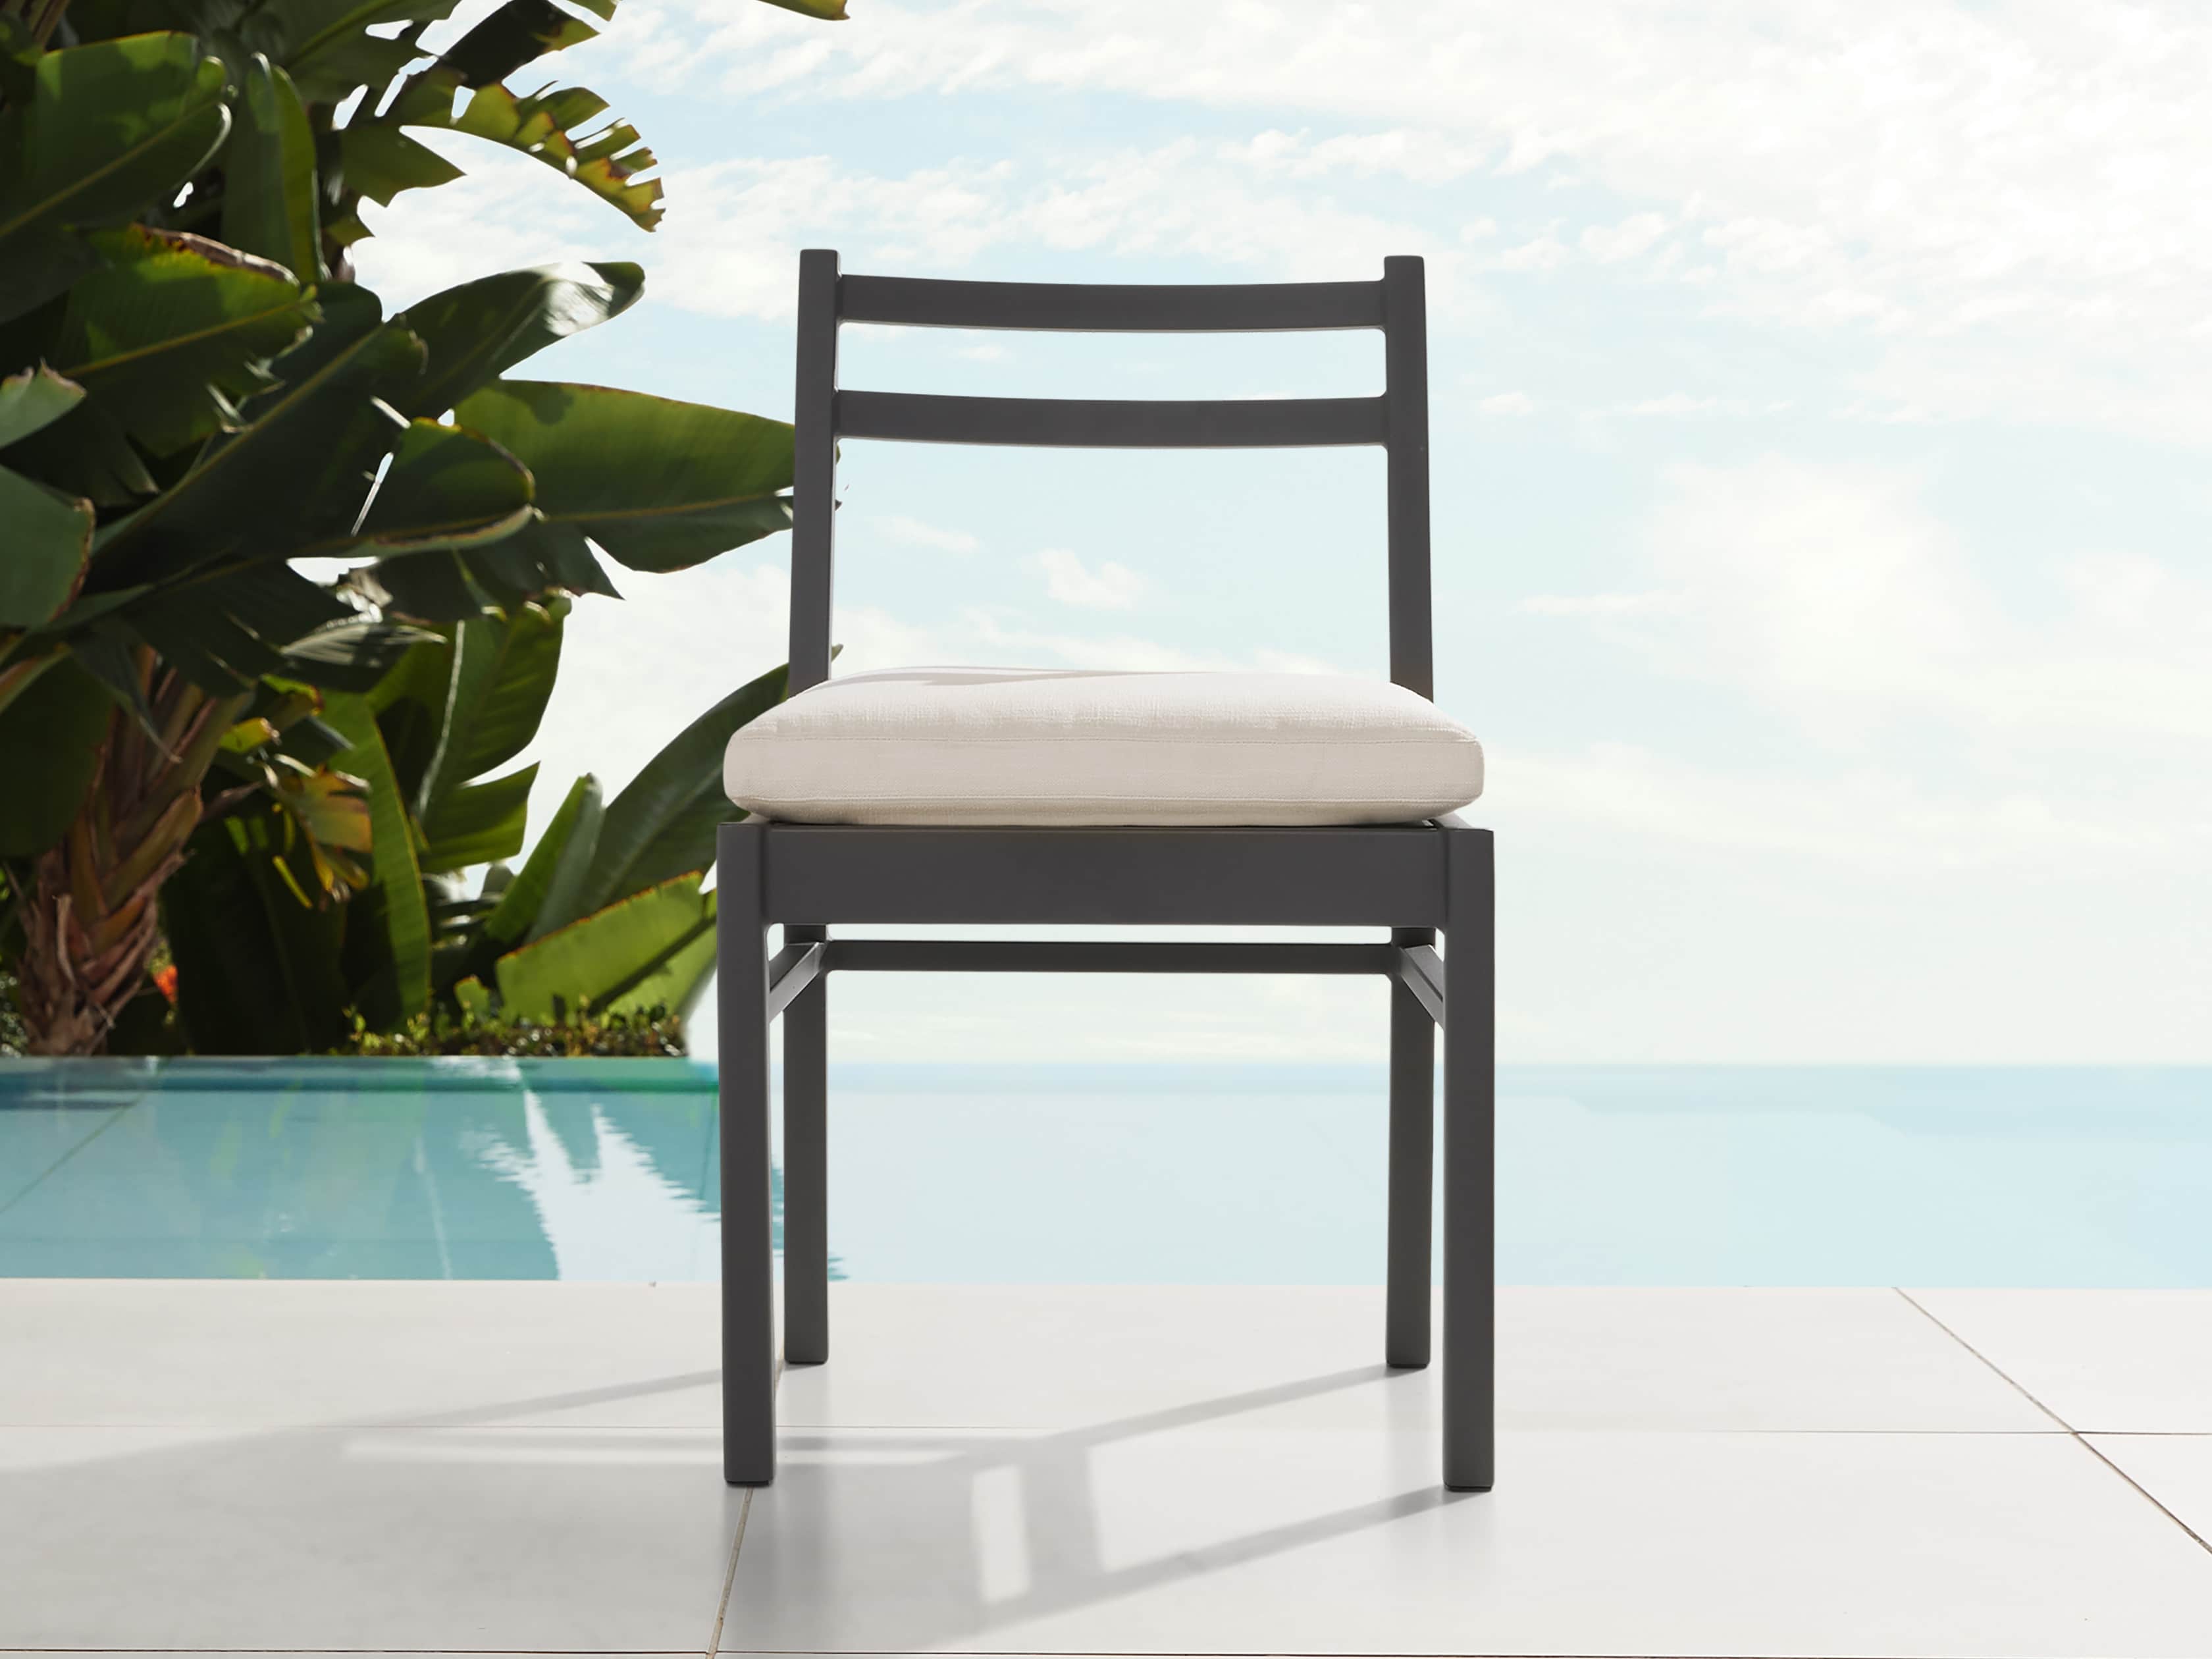  Costa  Outdoor Aluminum Dining  Side Chair  Arhaus